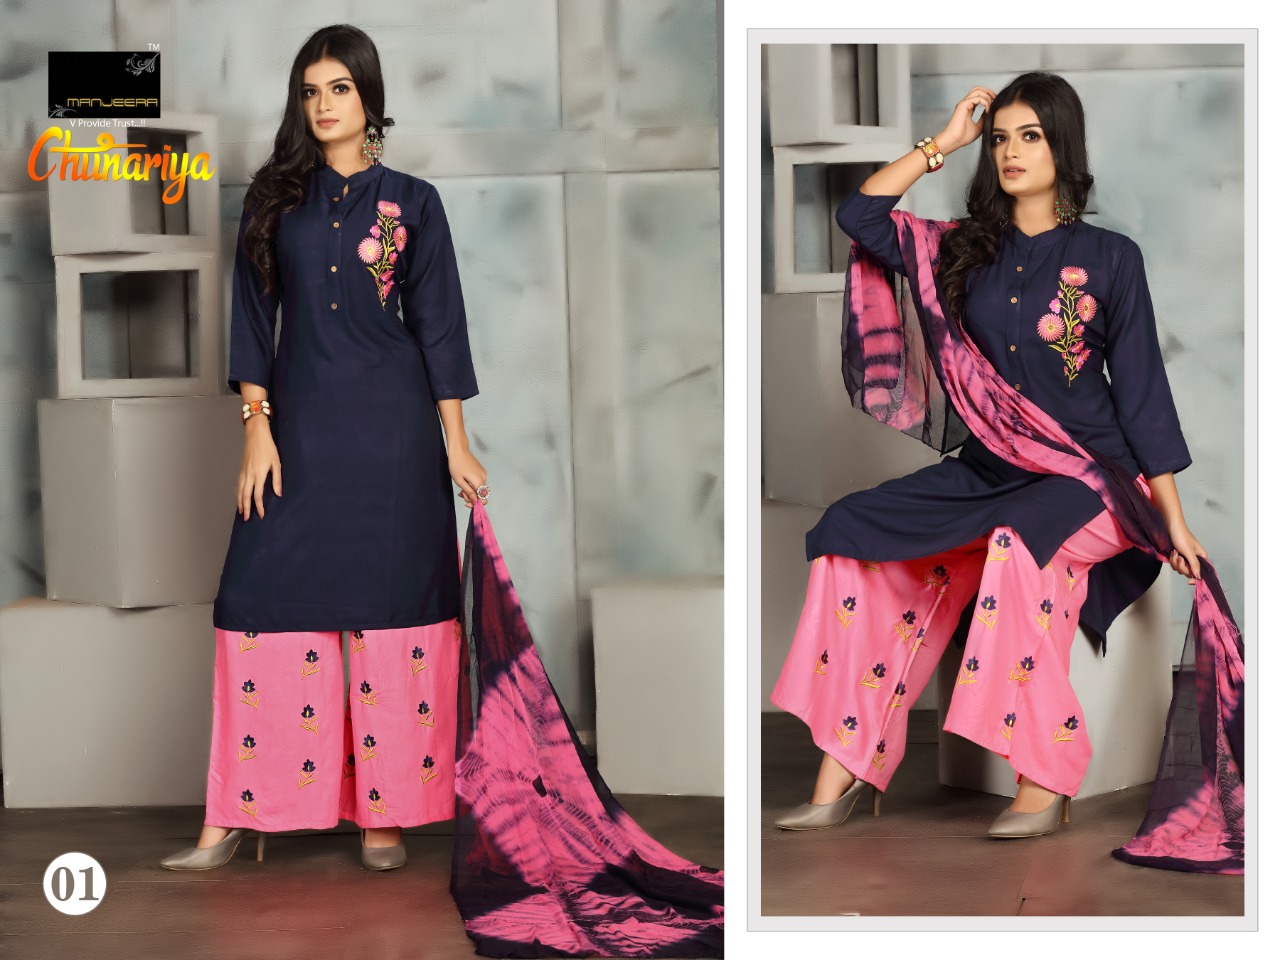 Manjeera chunariya elagant and modern Stylish classic trendy fits Kurties in wholesale